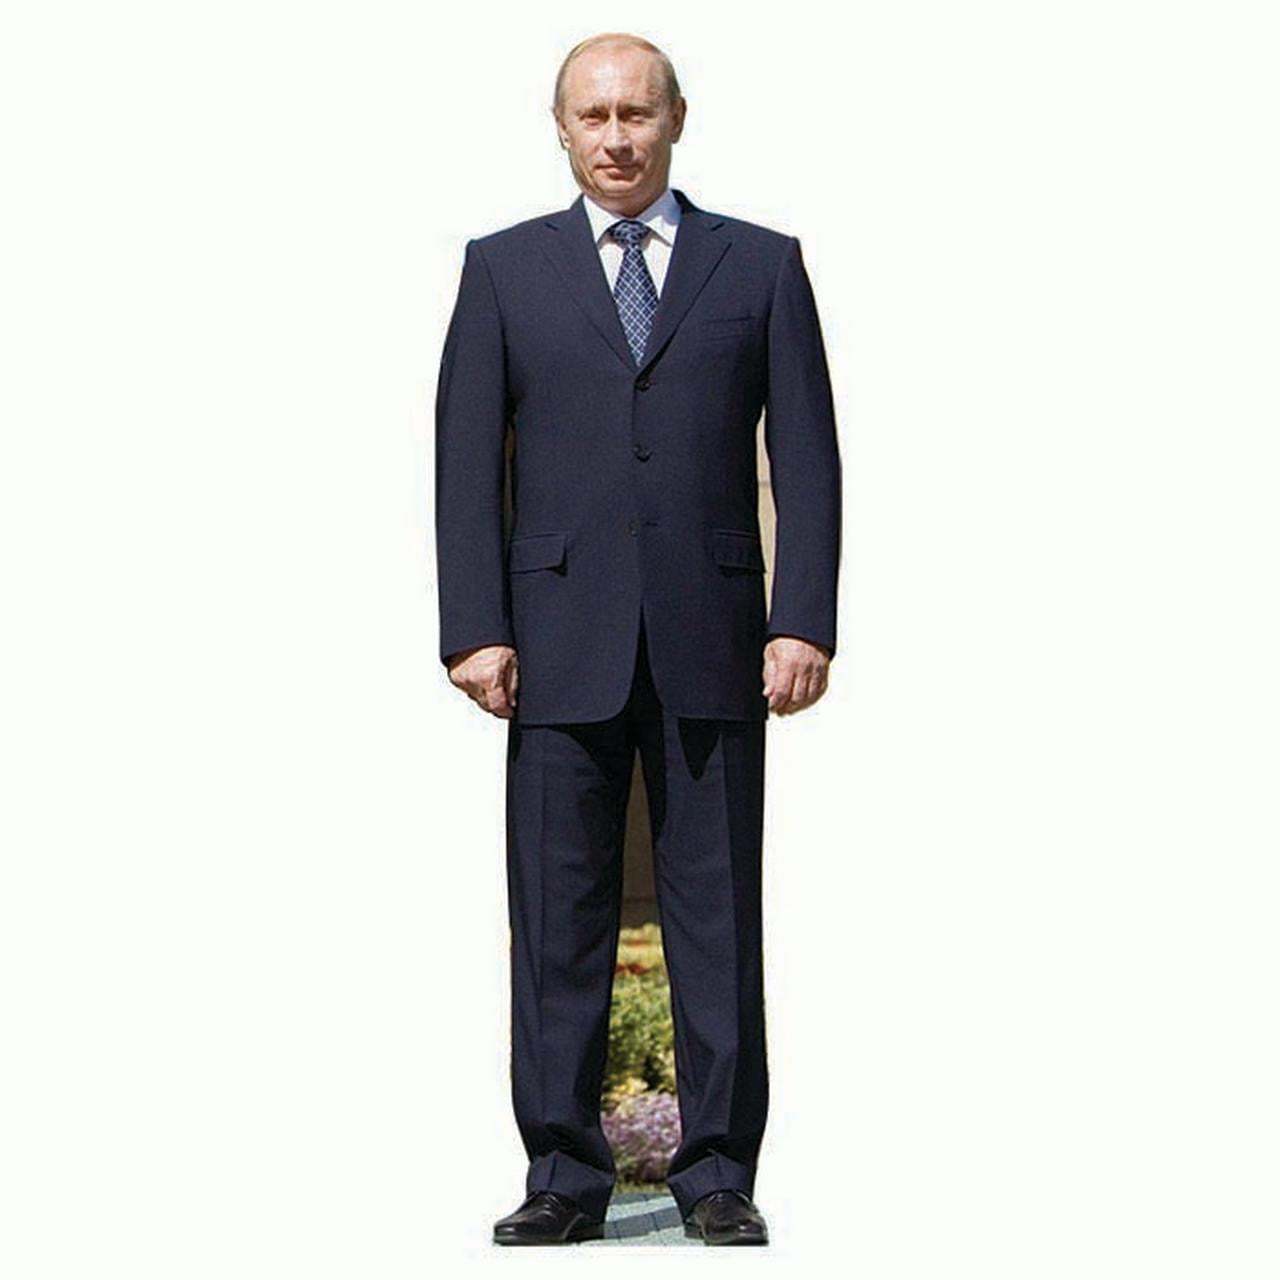 Vladimir Putin Cardboard Cutout 